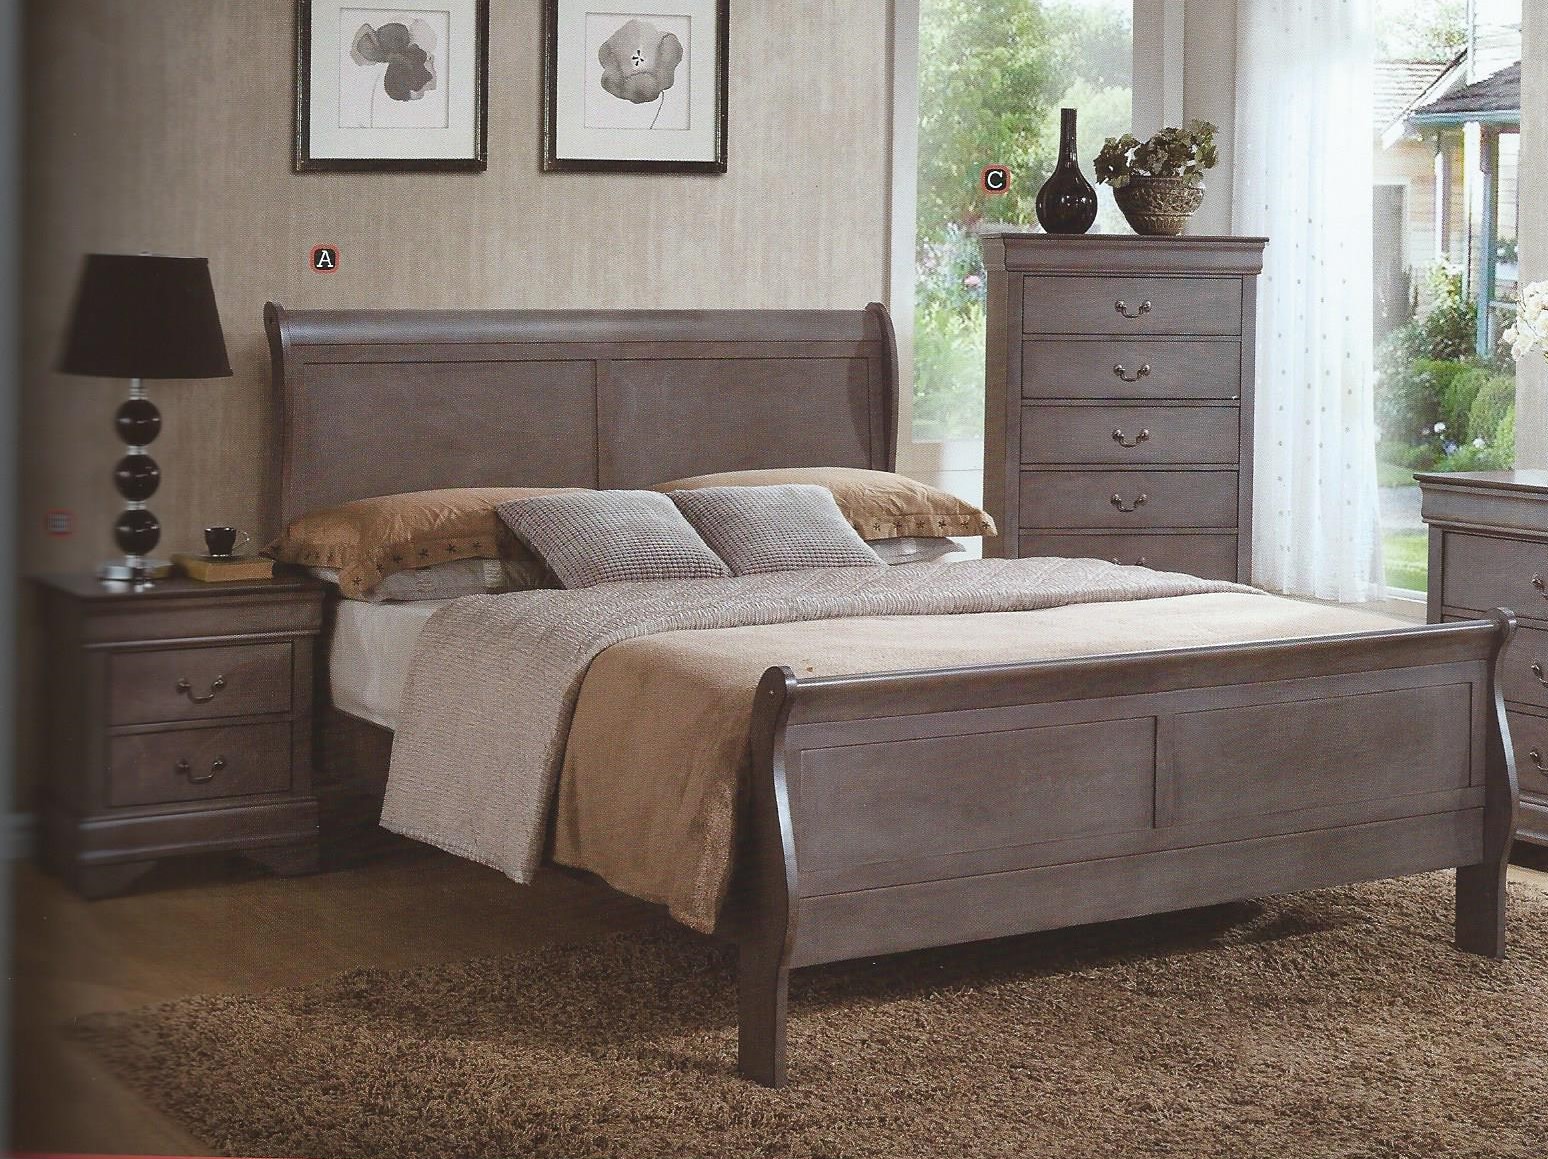 Bedroom furniture wilmington nc | Master bedroom furniturefurniture ...